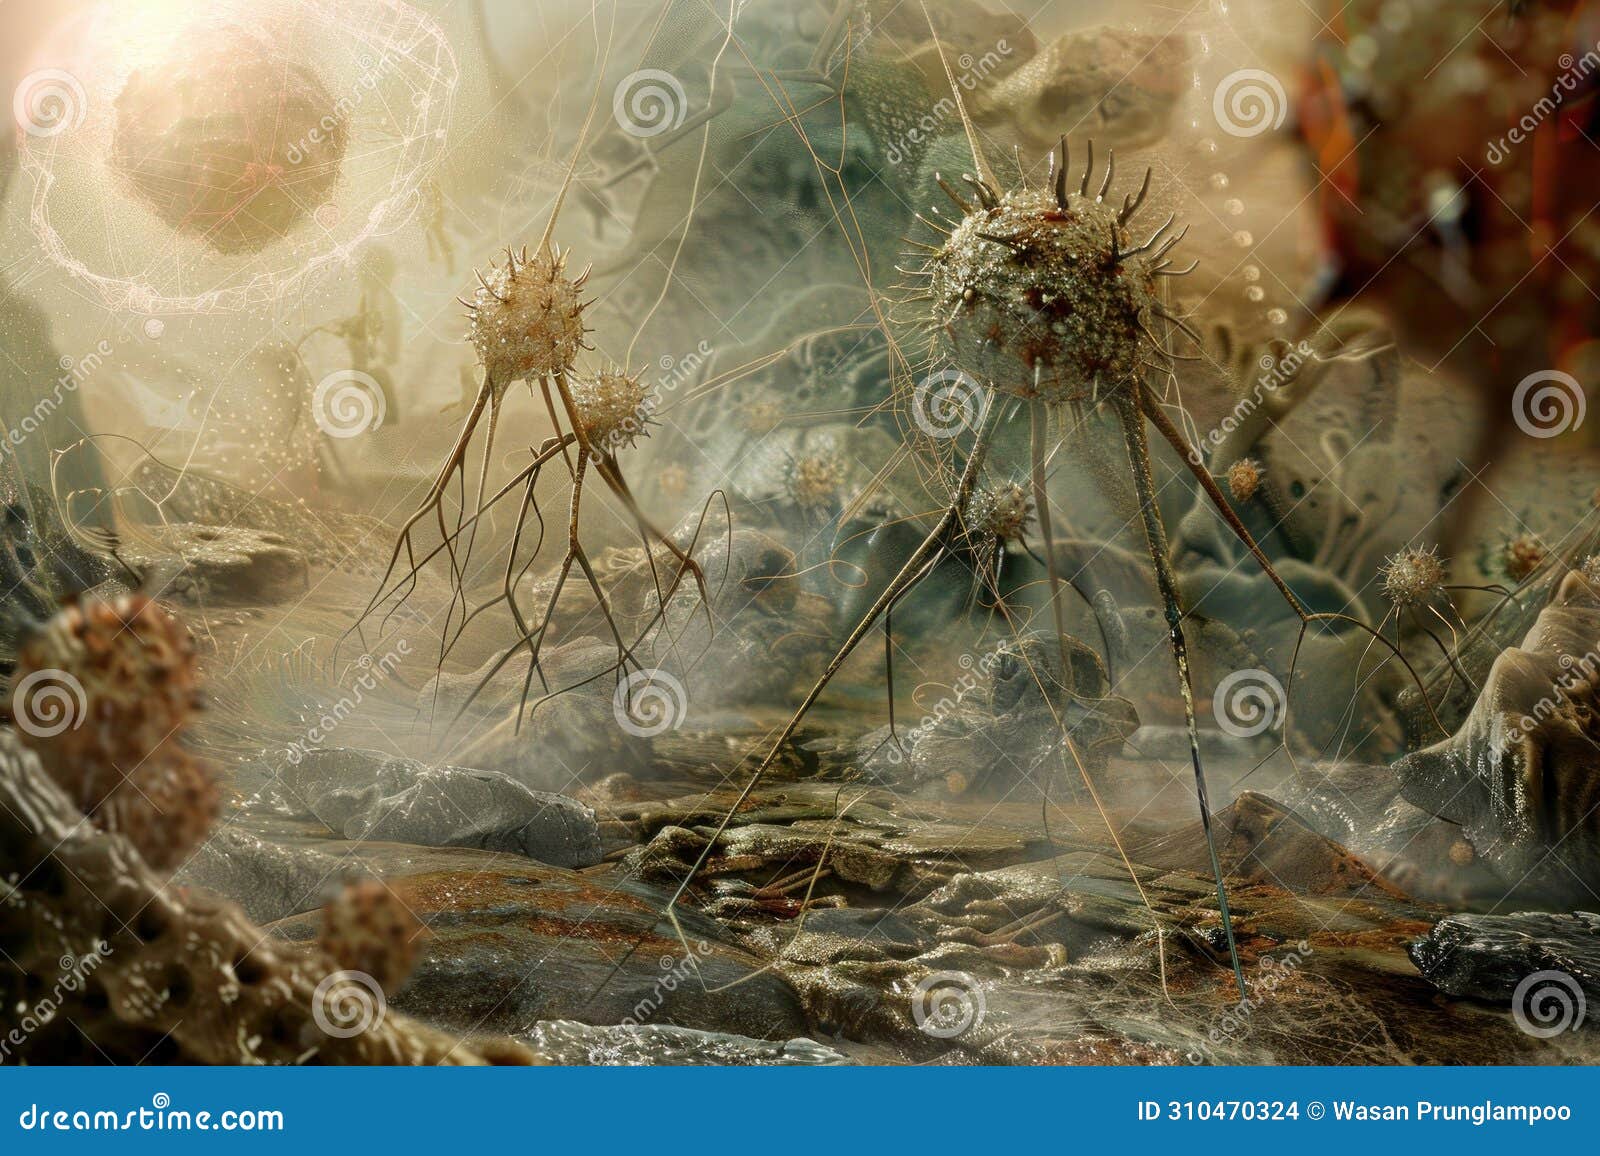 digital art piece showing bacteriophages as nanotech warriors in a microcosmic battle